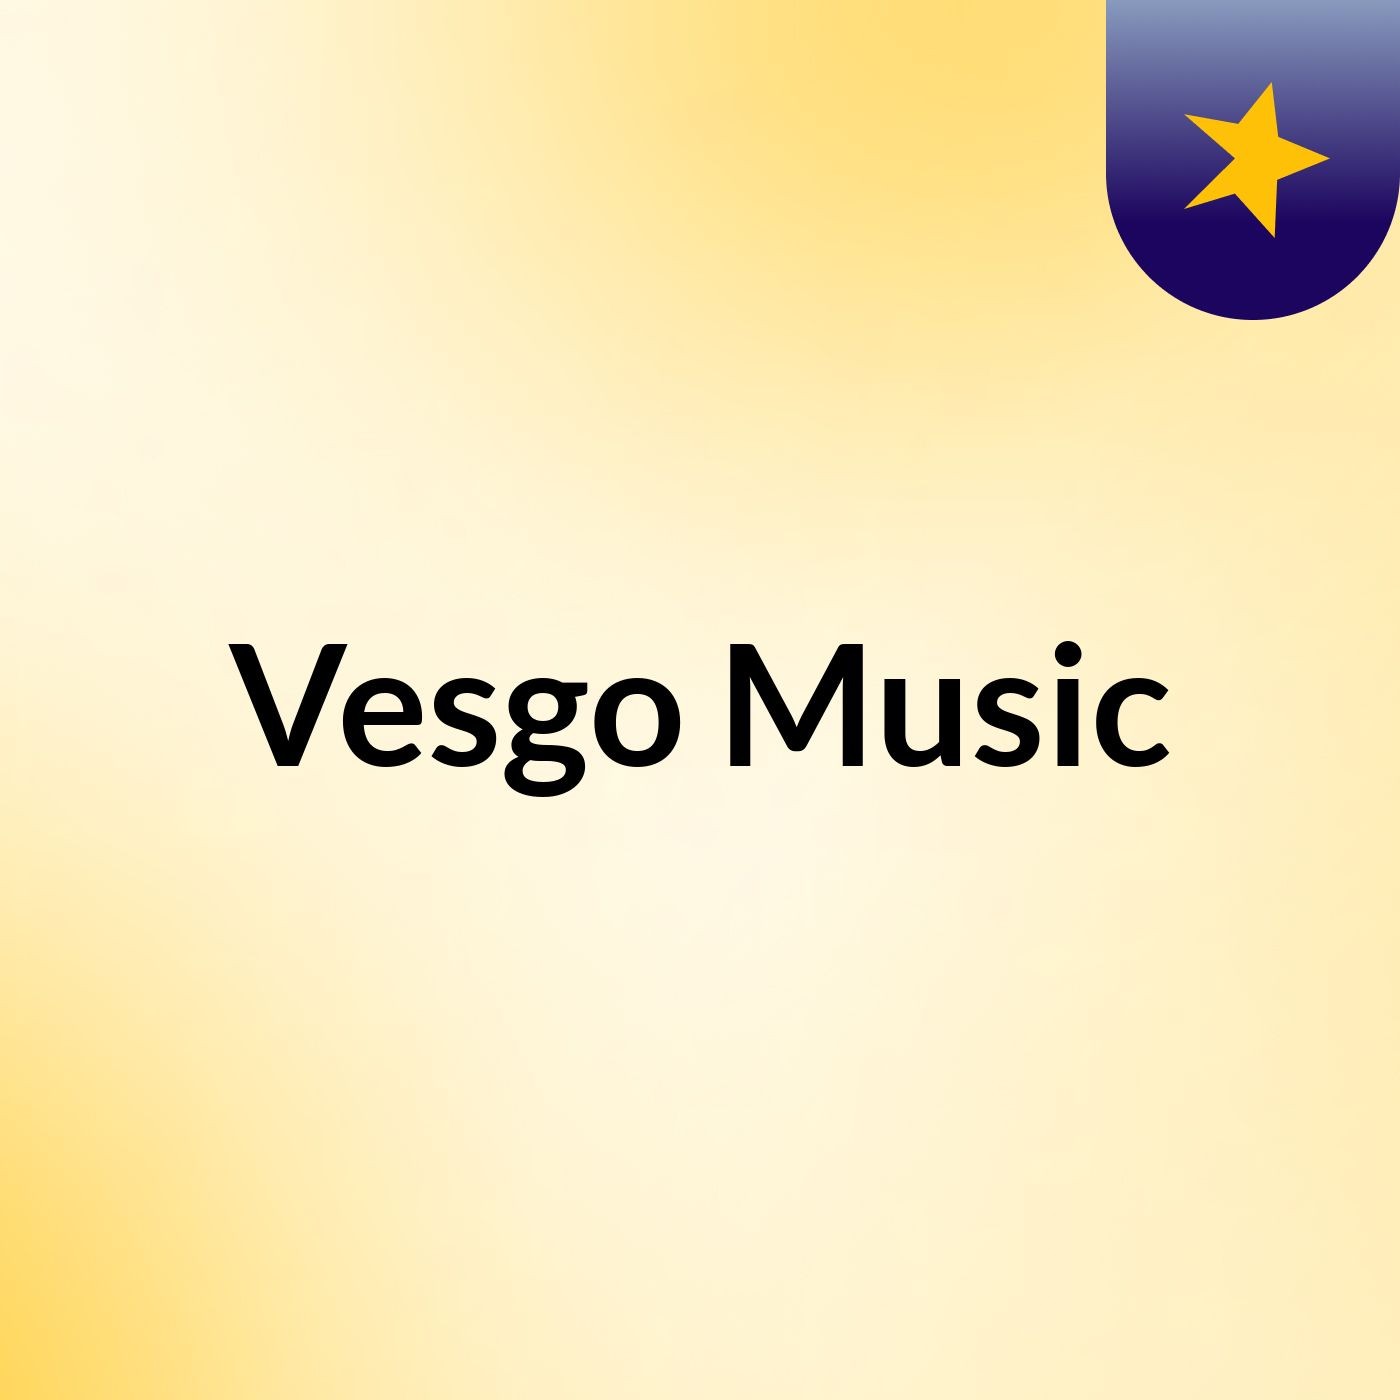 Vesgo Music